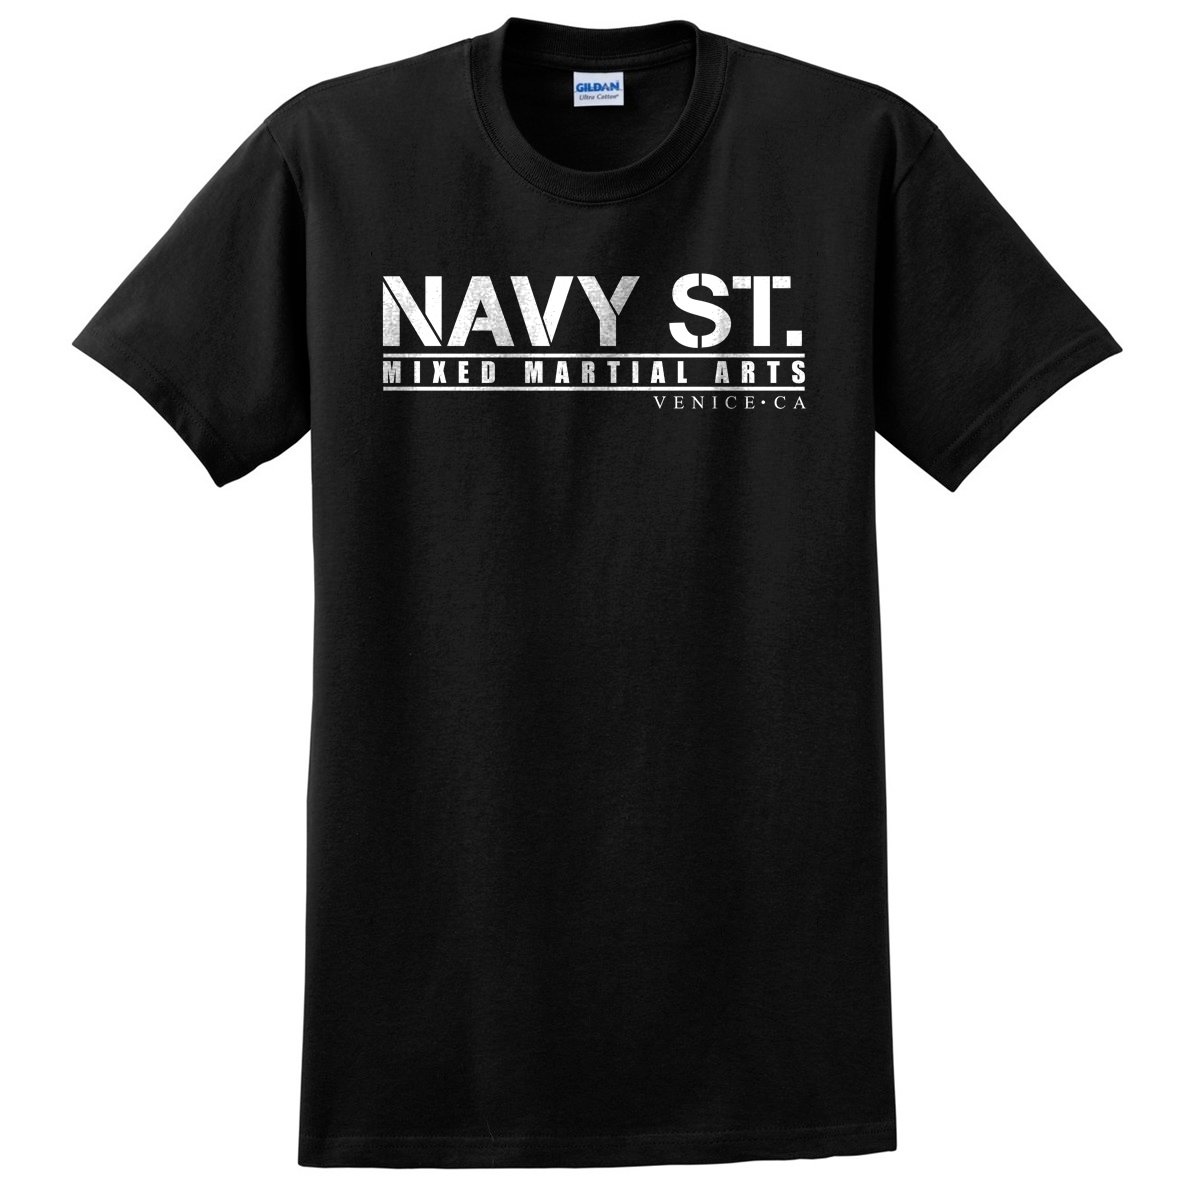 Navy St. Shirt MMA Gym Mixed Martial Arts Black T-Shirt's